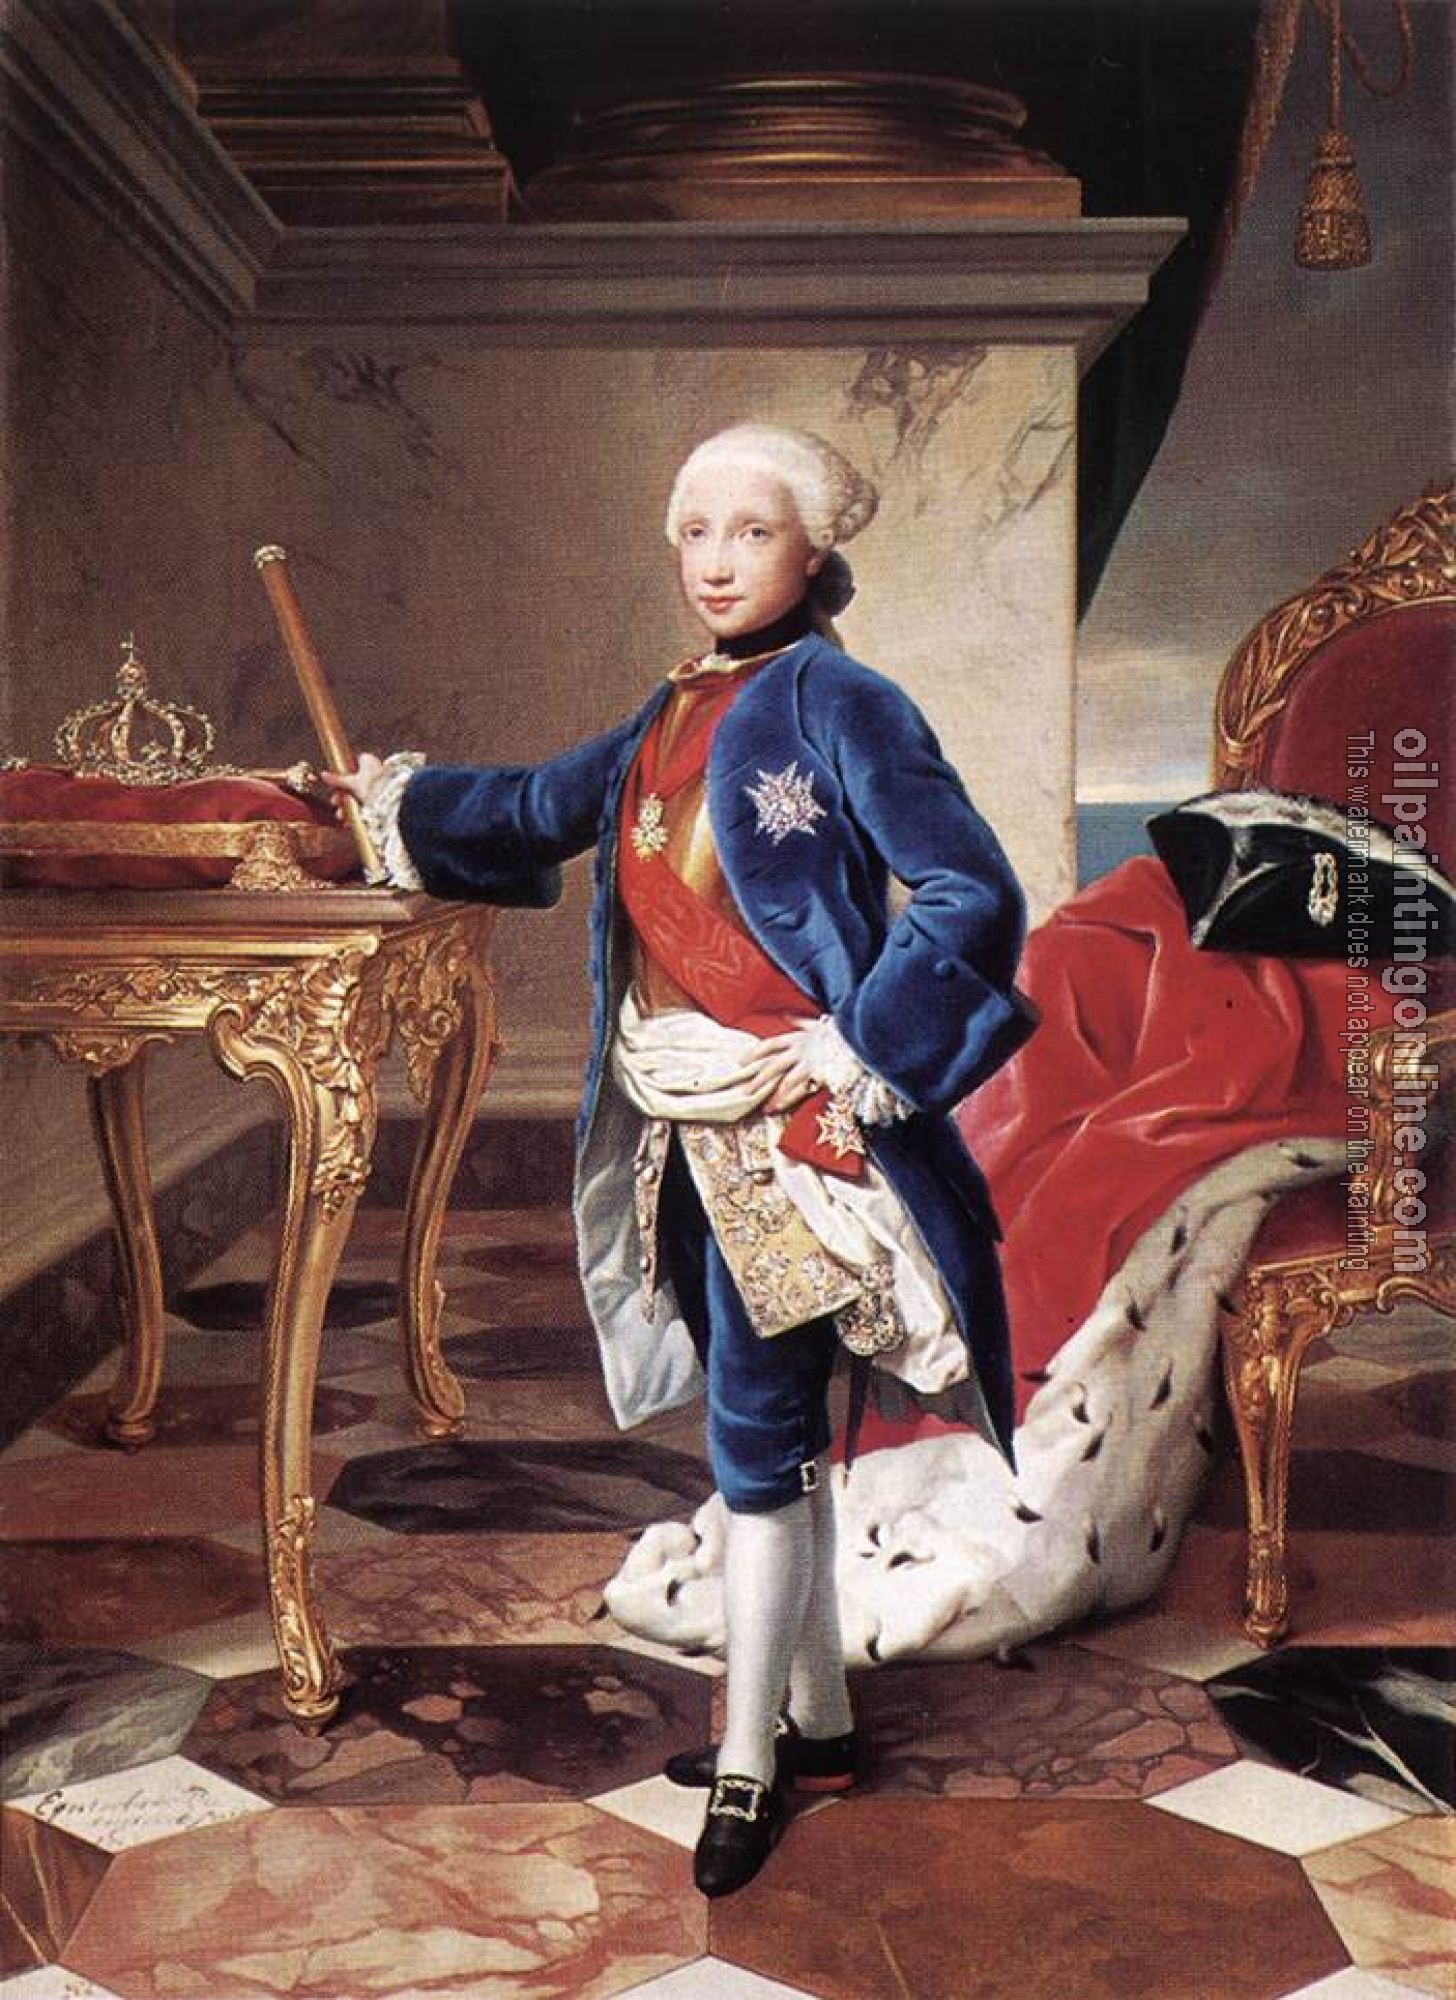 Mengs, Anton Raphael - Ferdinand IV, King of Naples